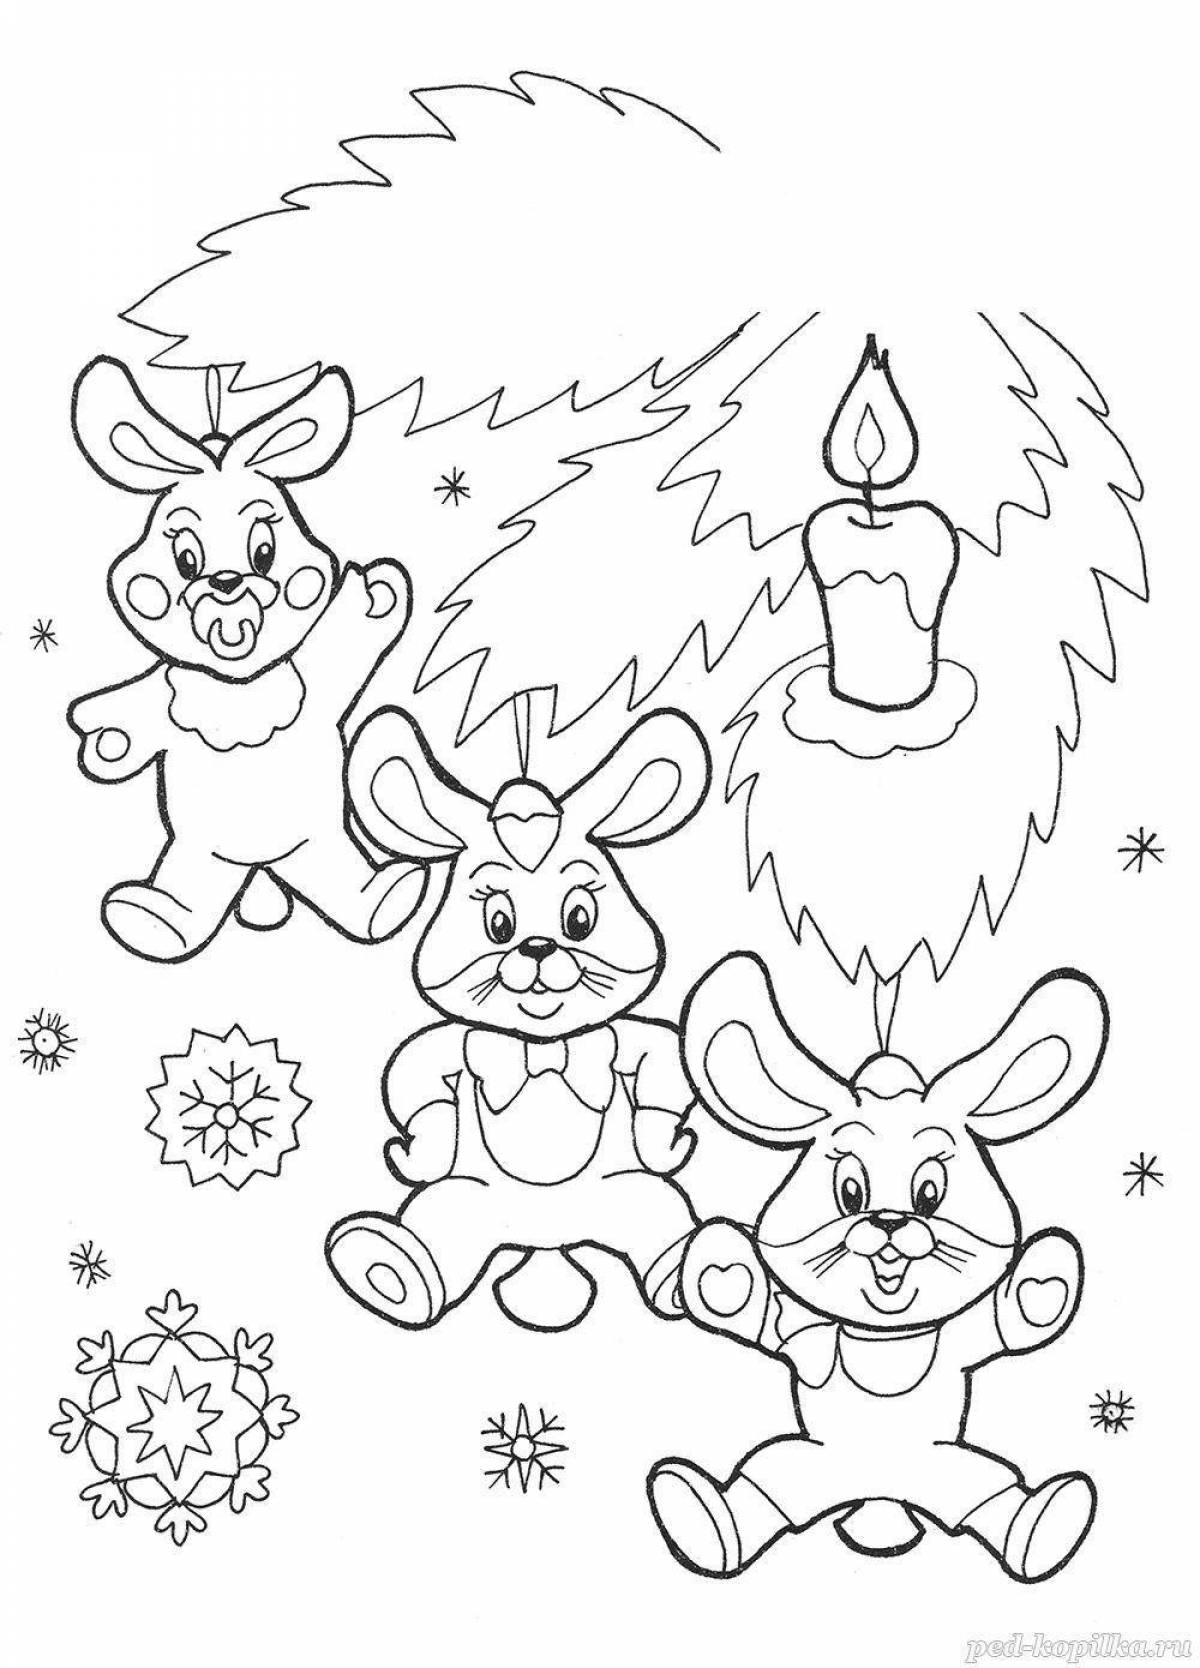 Joyful coloring bunny new year